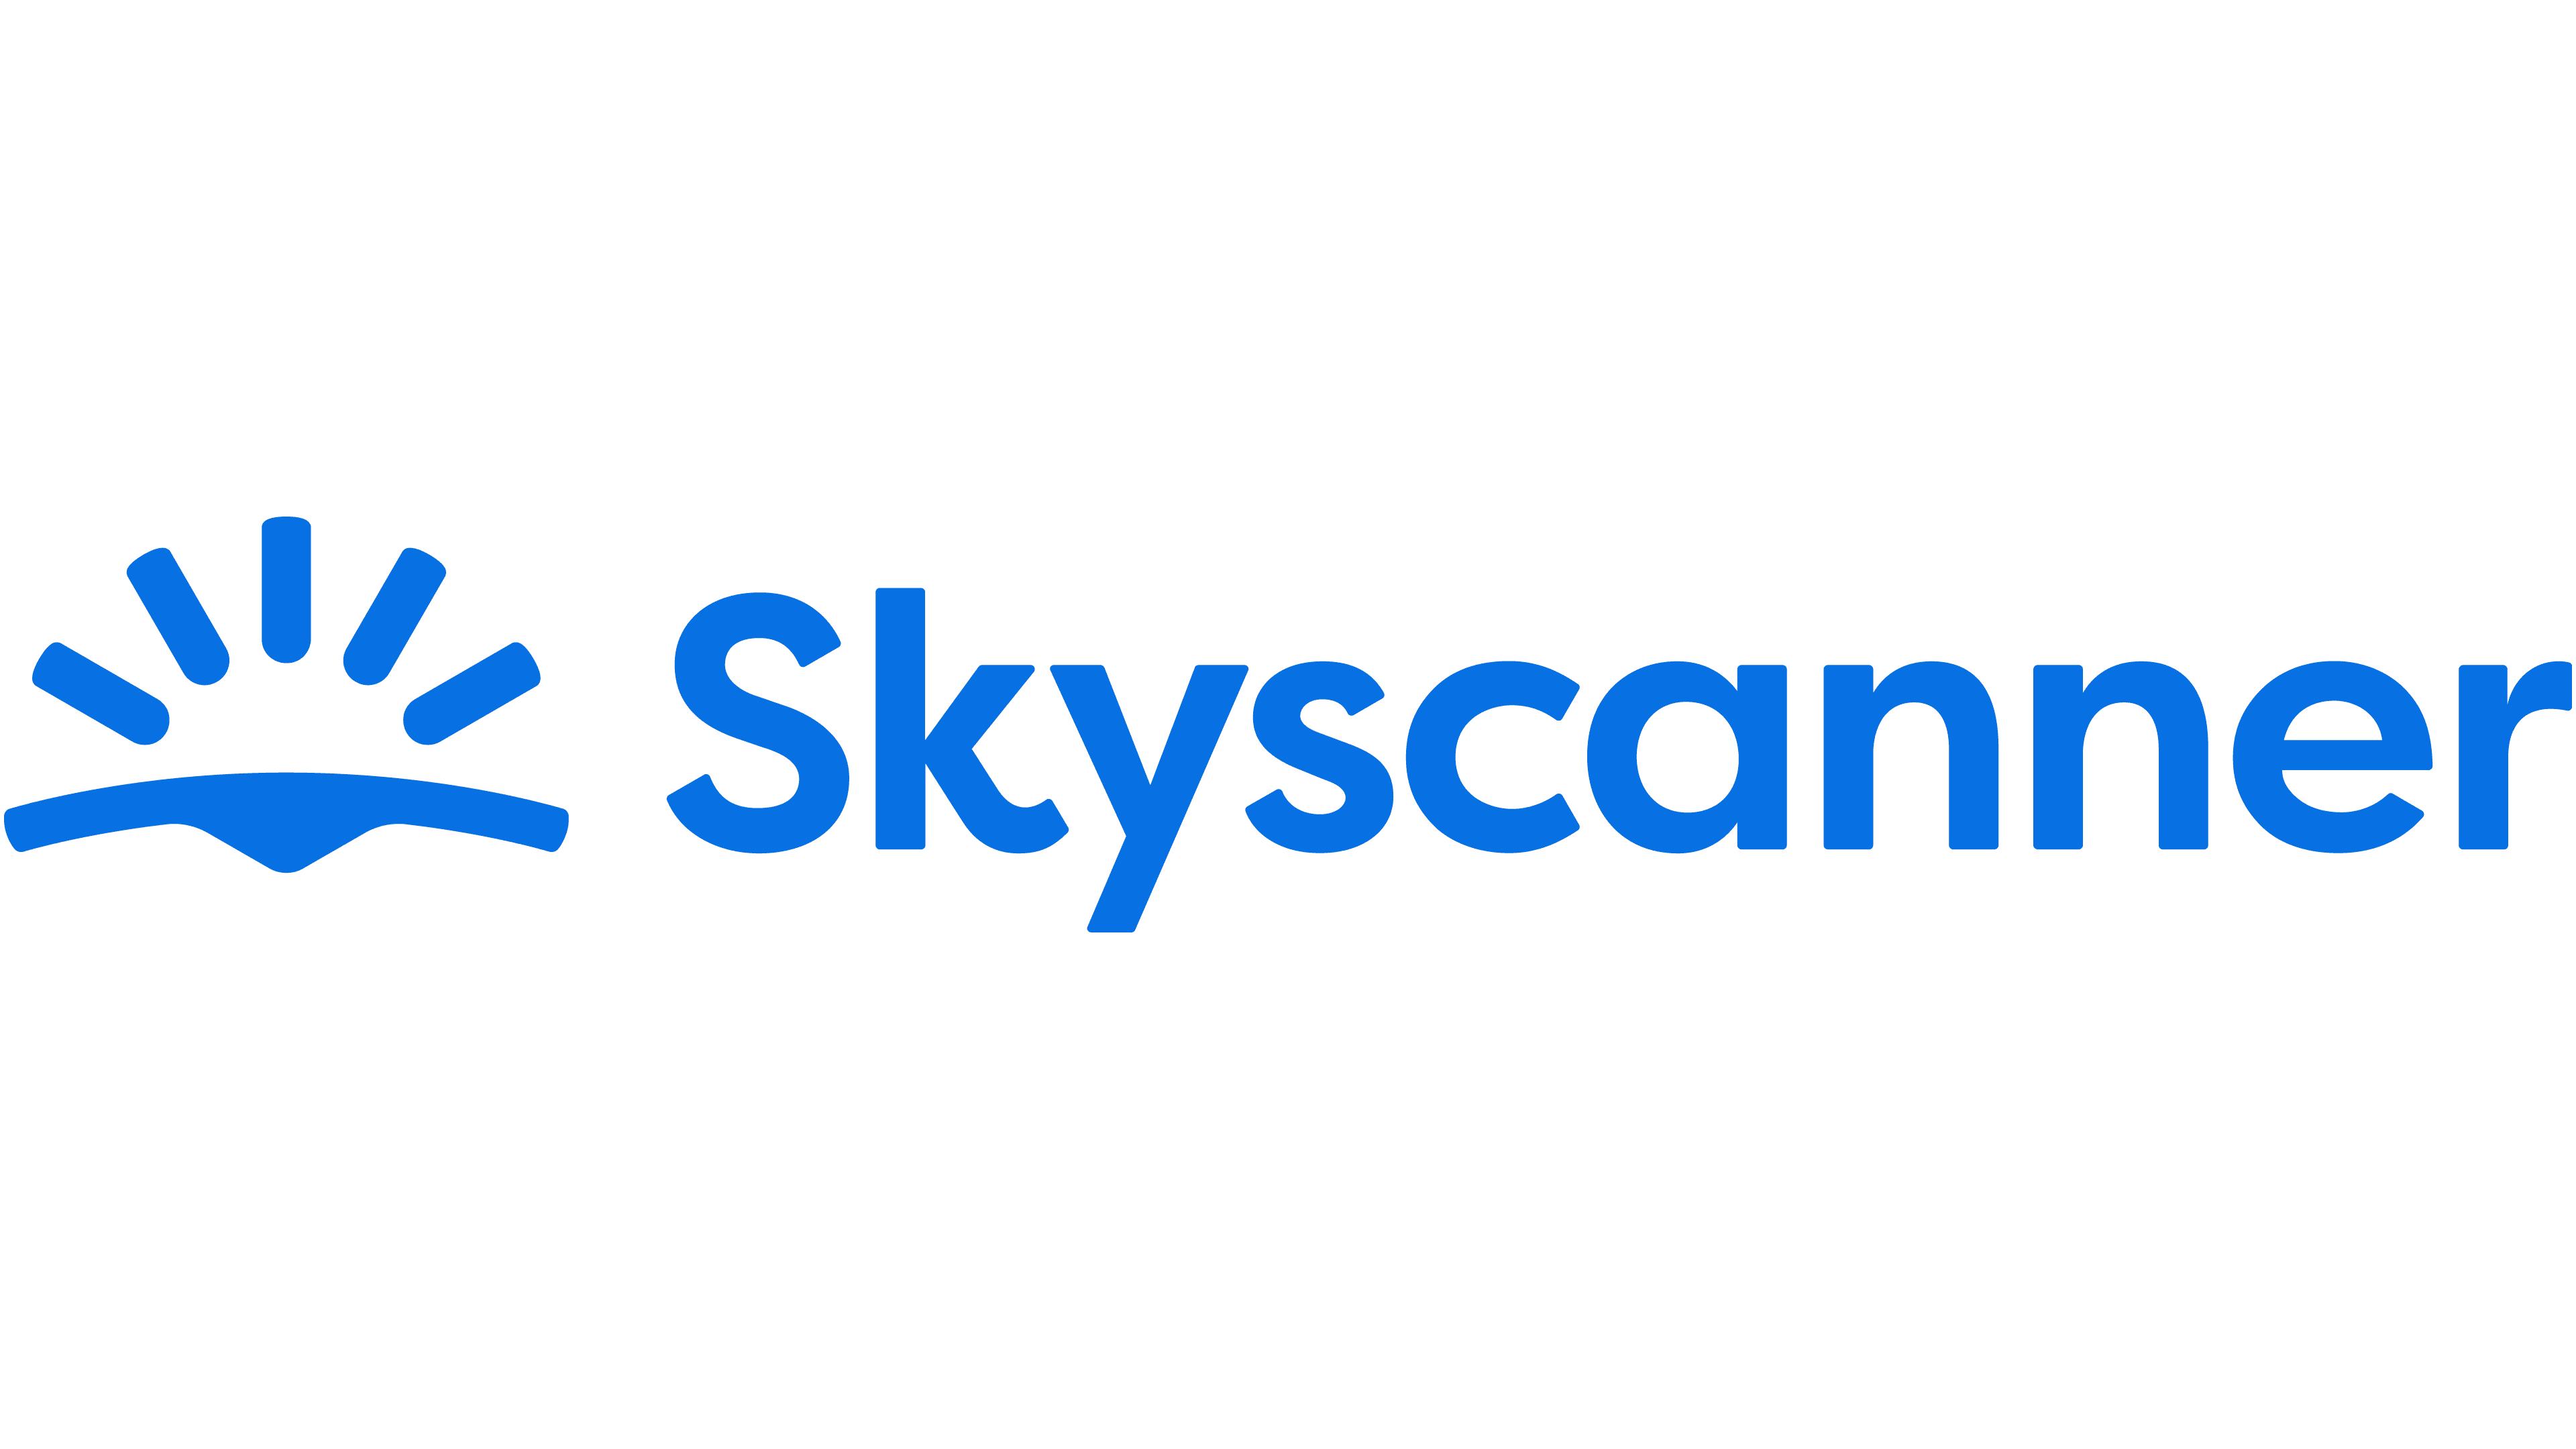 Proxy Skyscanner